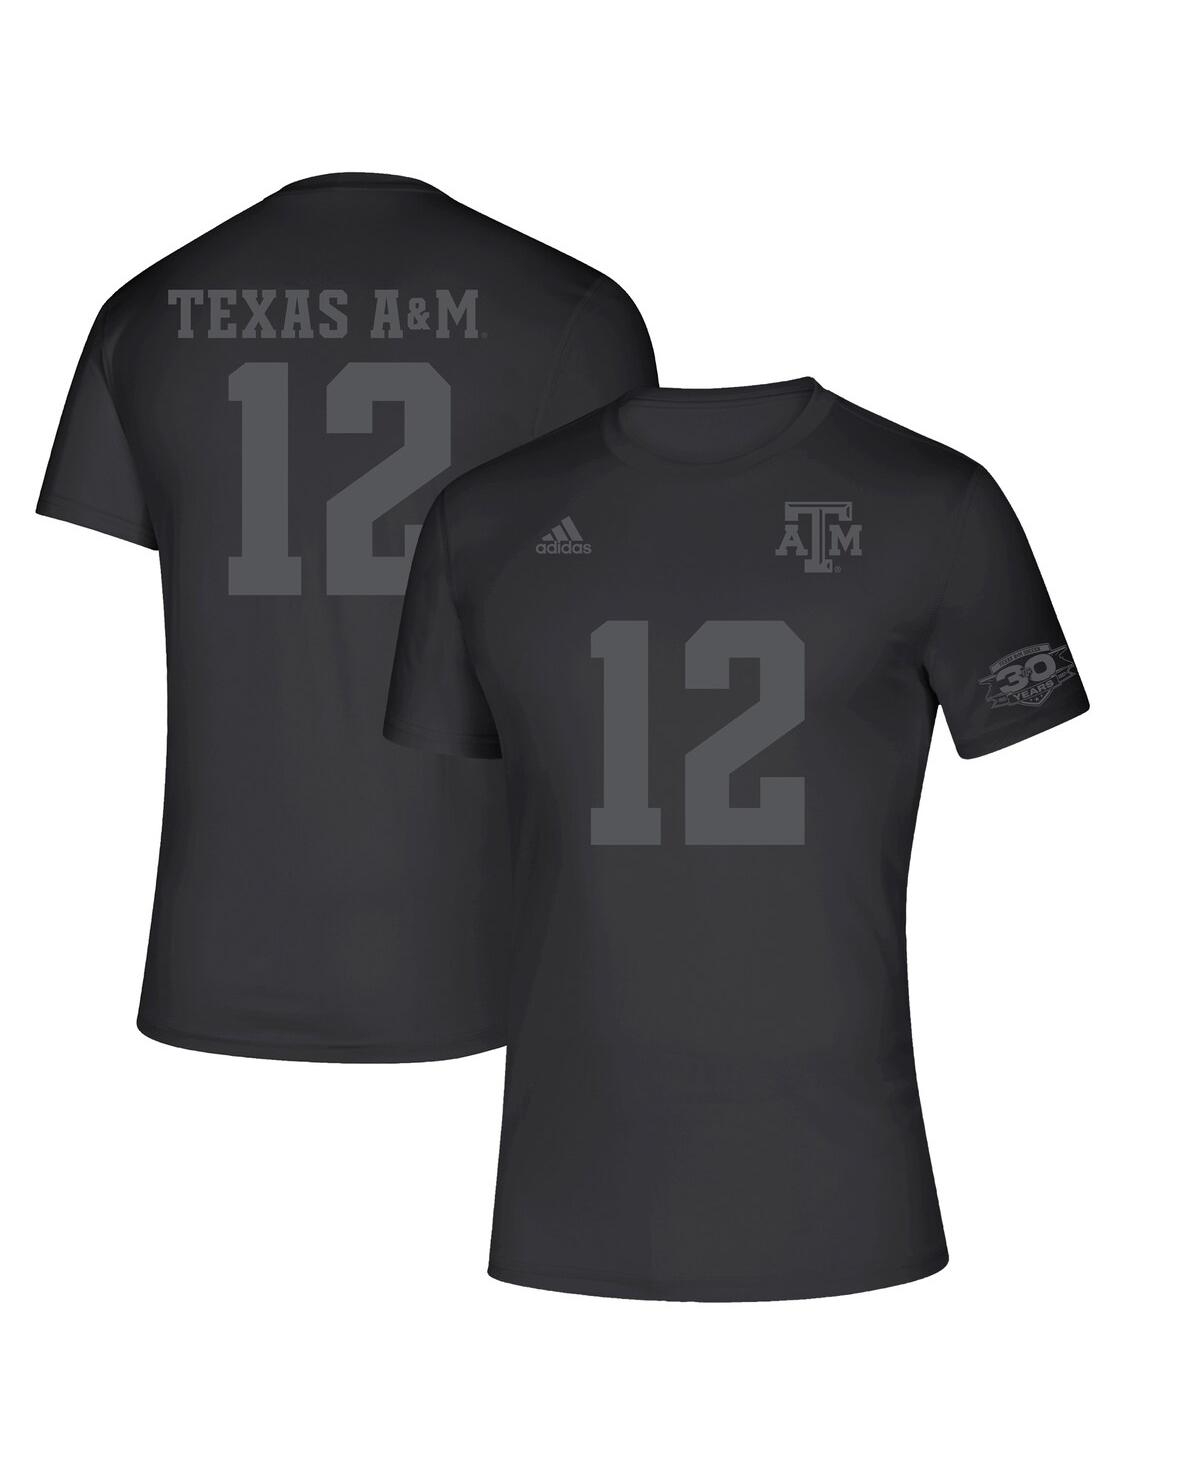 Men's and Women's adidas Black Texas A M Aggies Soccer 30th Anniversary T-shirt - Black